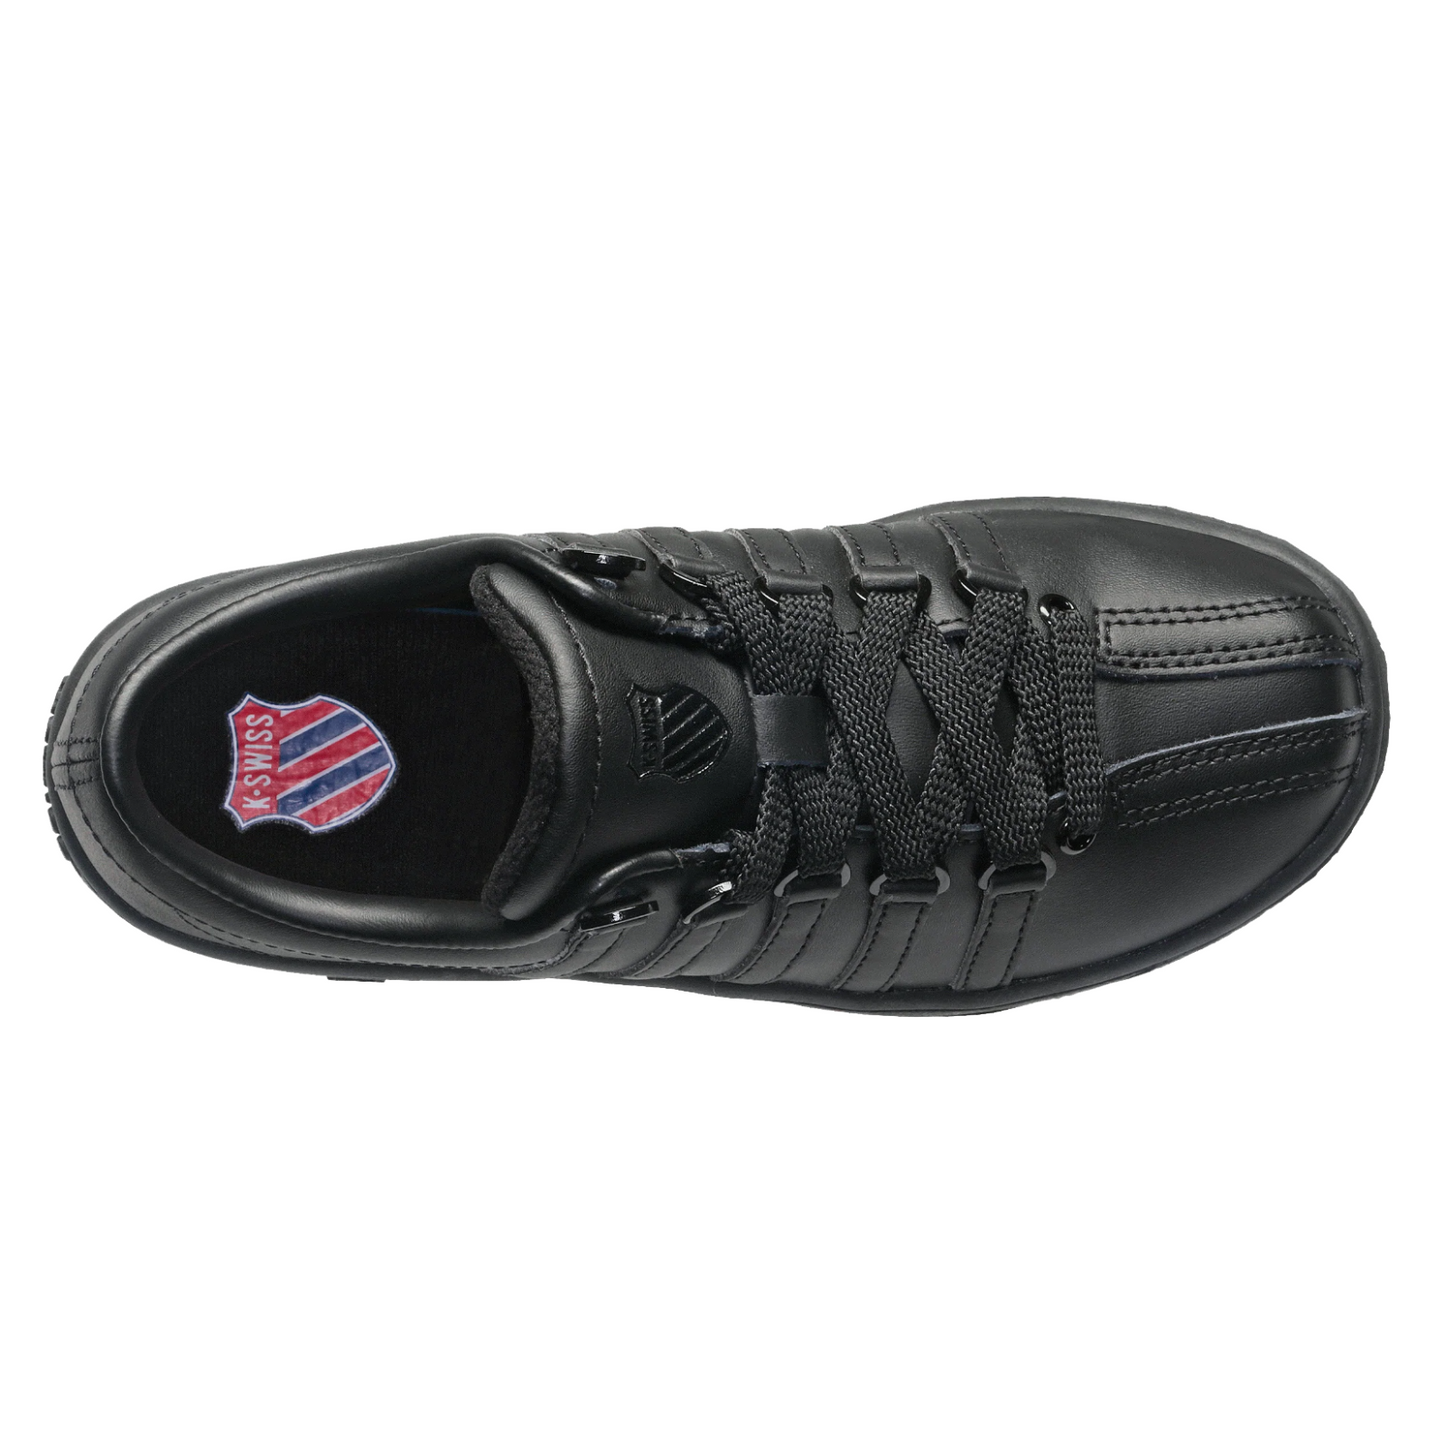 K-Swiss Preschool Low Classic LX Shoes Black/Black 57161-001-M